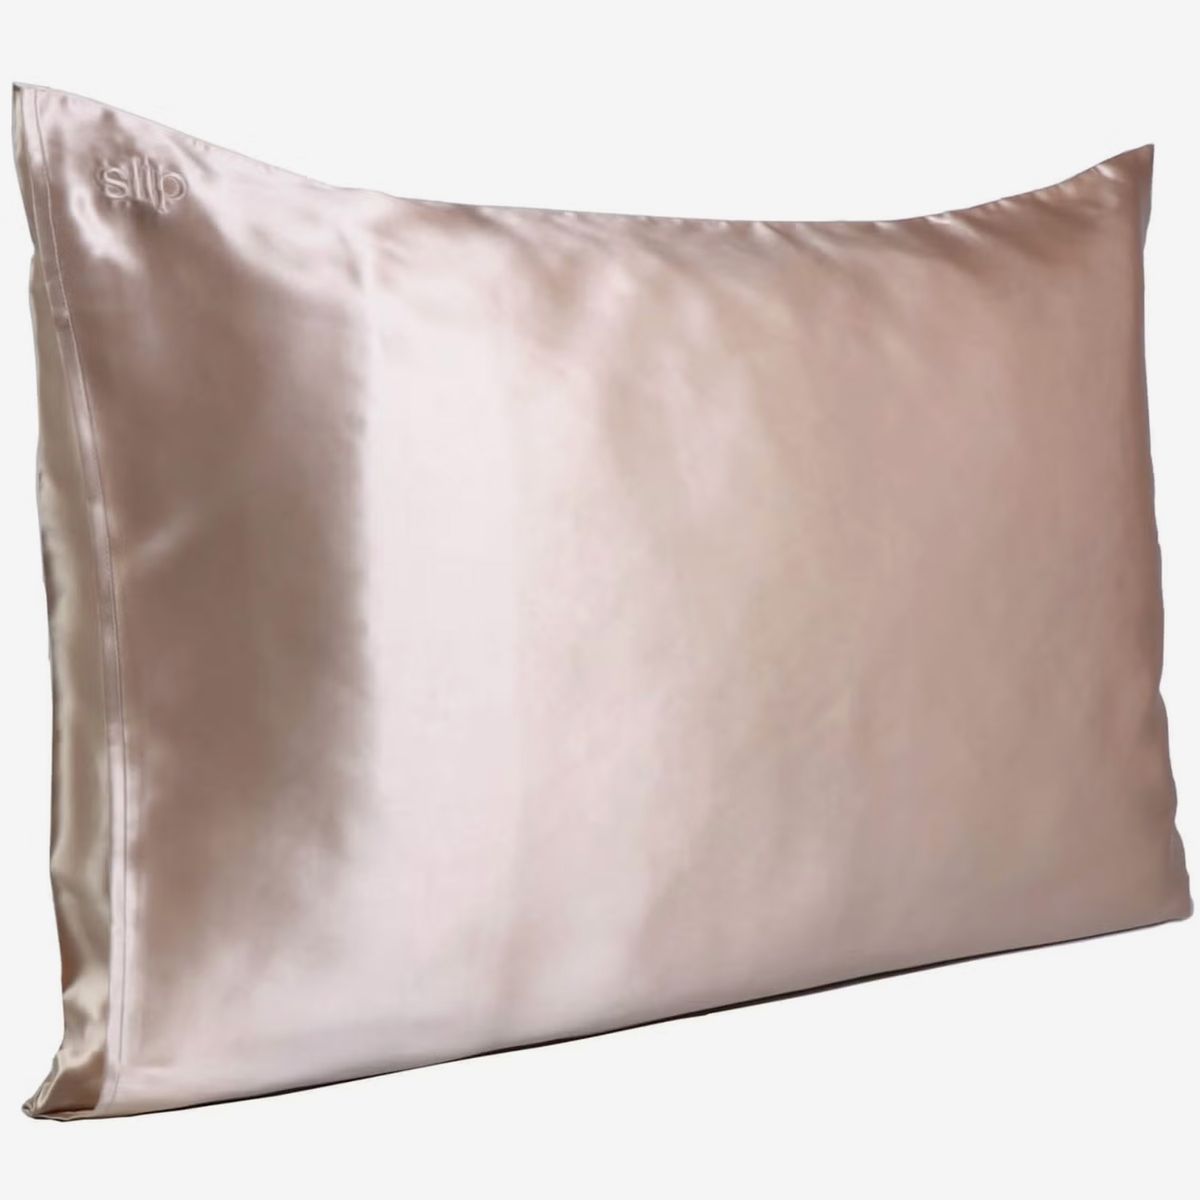 Slip Dermstore Exclusive Silk Caramel Pillowcase Duo and Delicates Bag